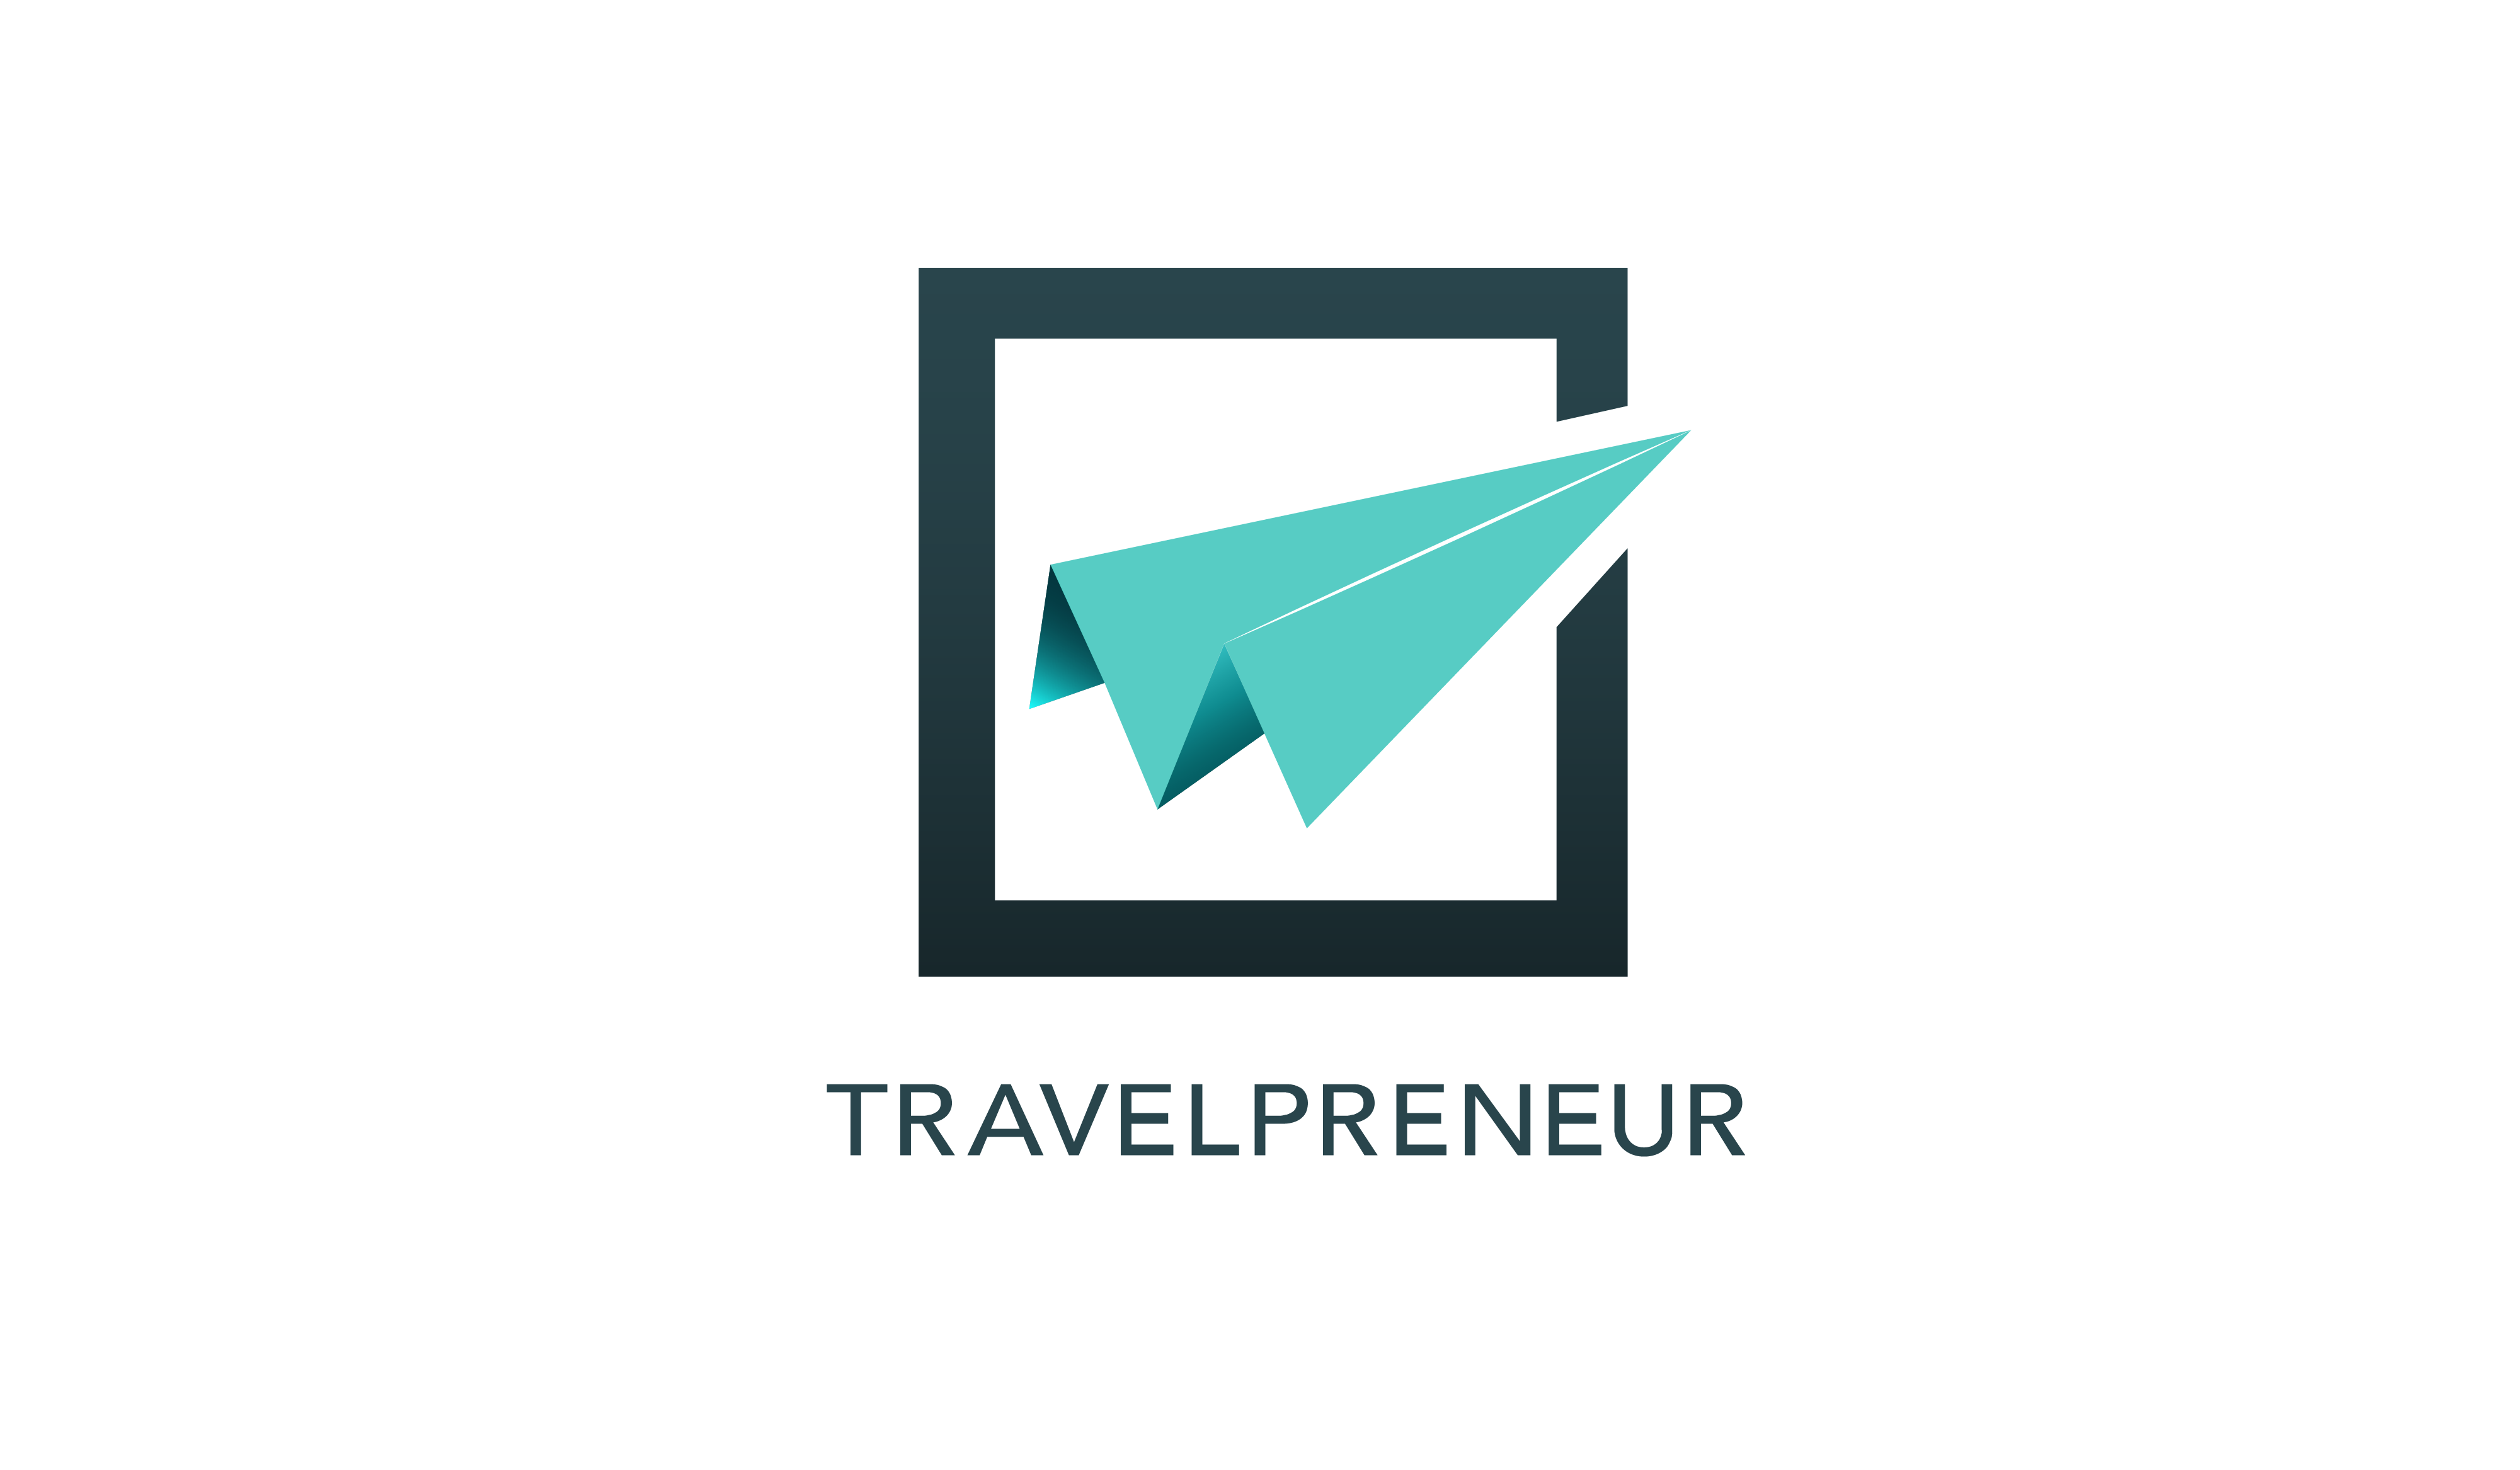 Travelpreneur